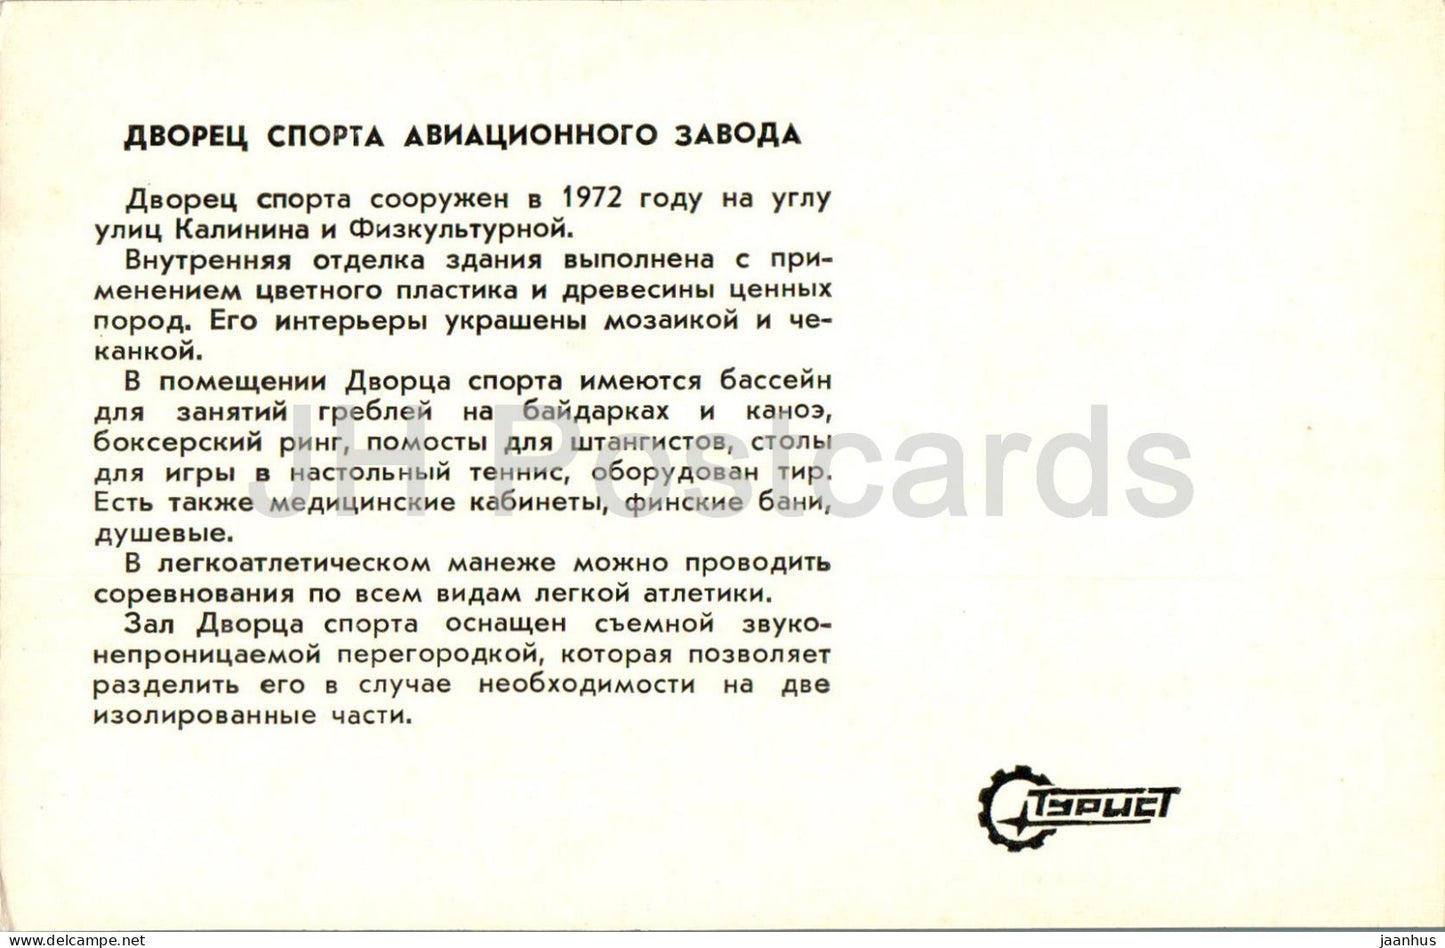 Samara - Kuybyshev - Sportpalast des Luftfahrtwerks - 1979 - Russland UdSSR - unbenutzt